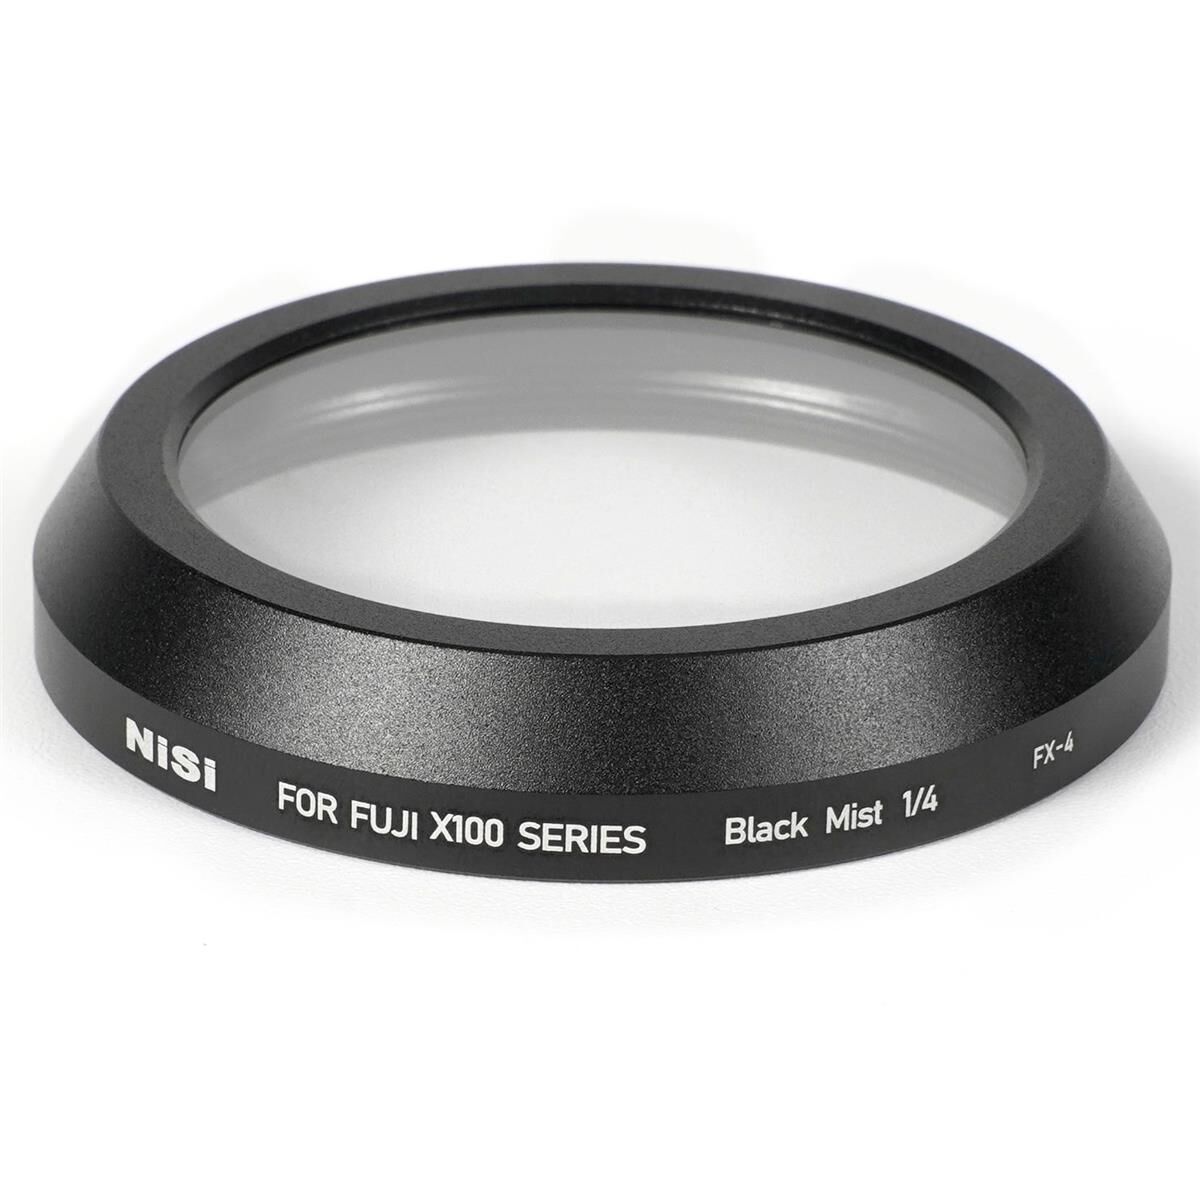 NiSi Black Mist 1/4 Filter for Fujifilm X100 Series Cameras, Black Frame